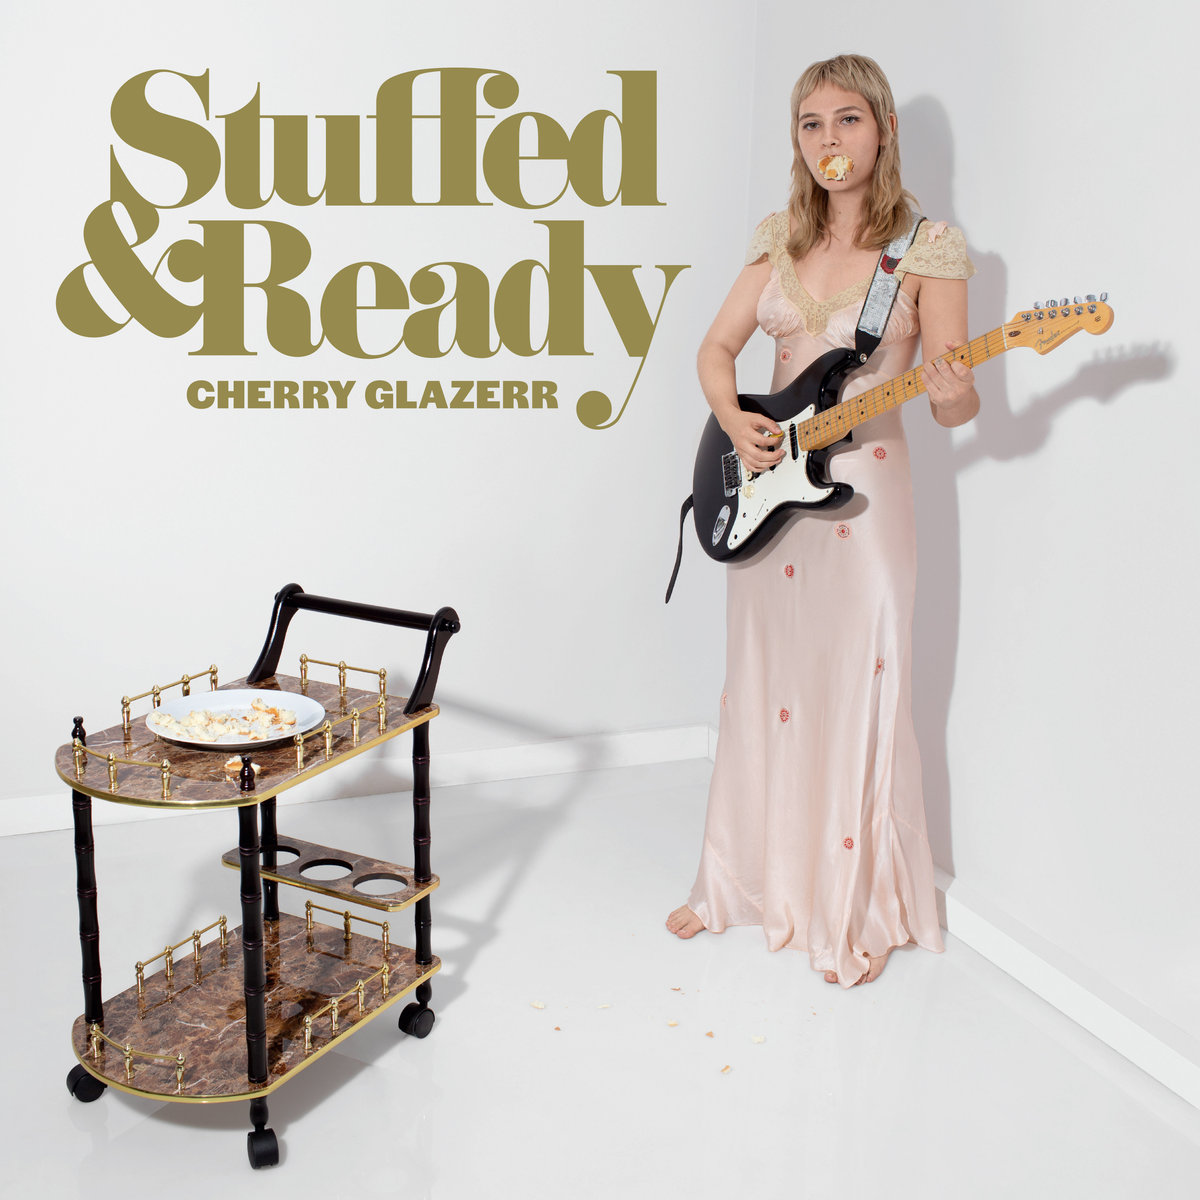 Cherry Glazerr: Stuffed and Ready